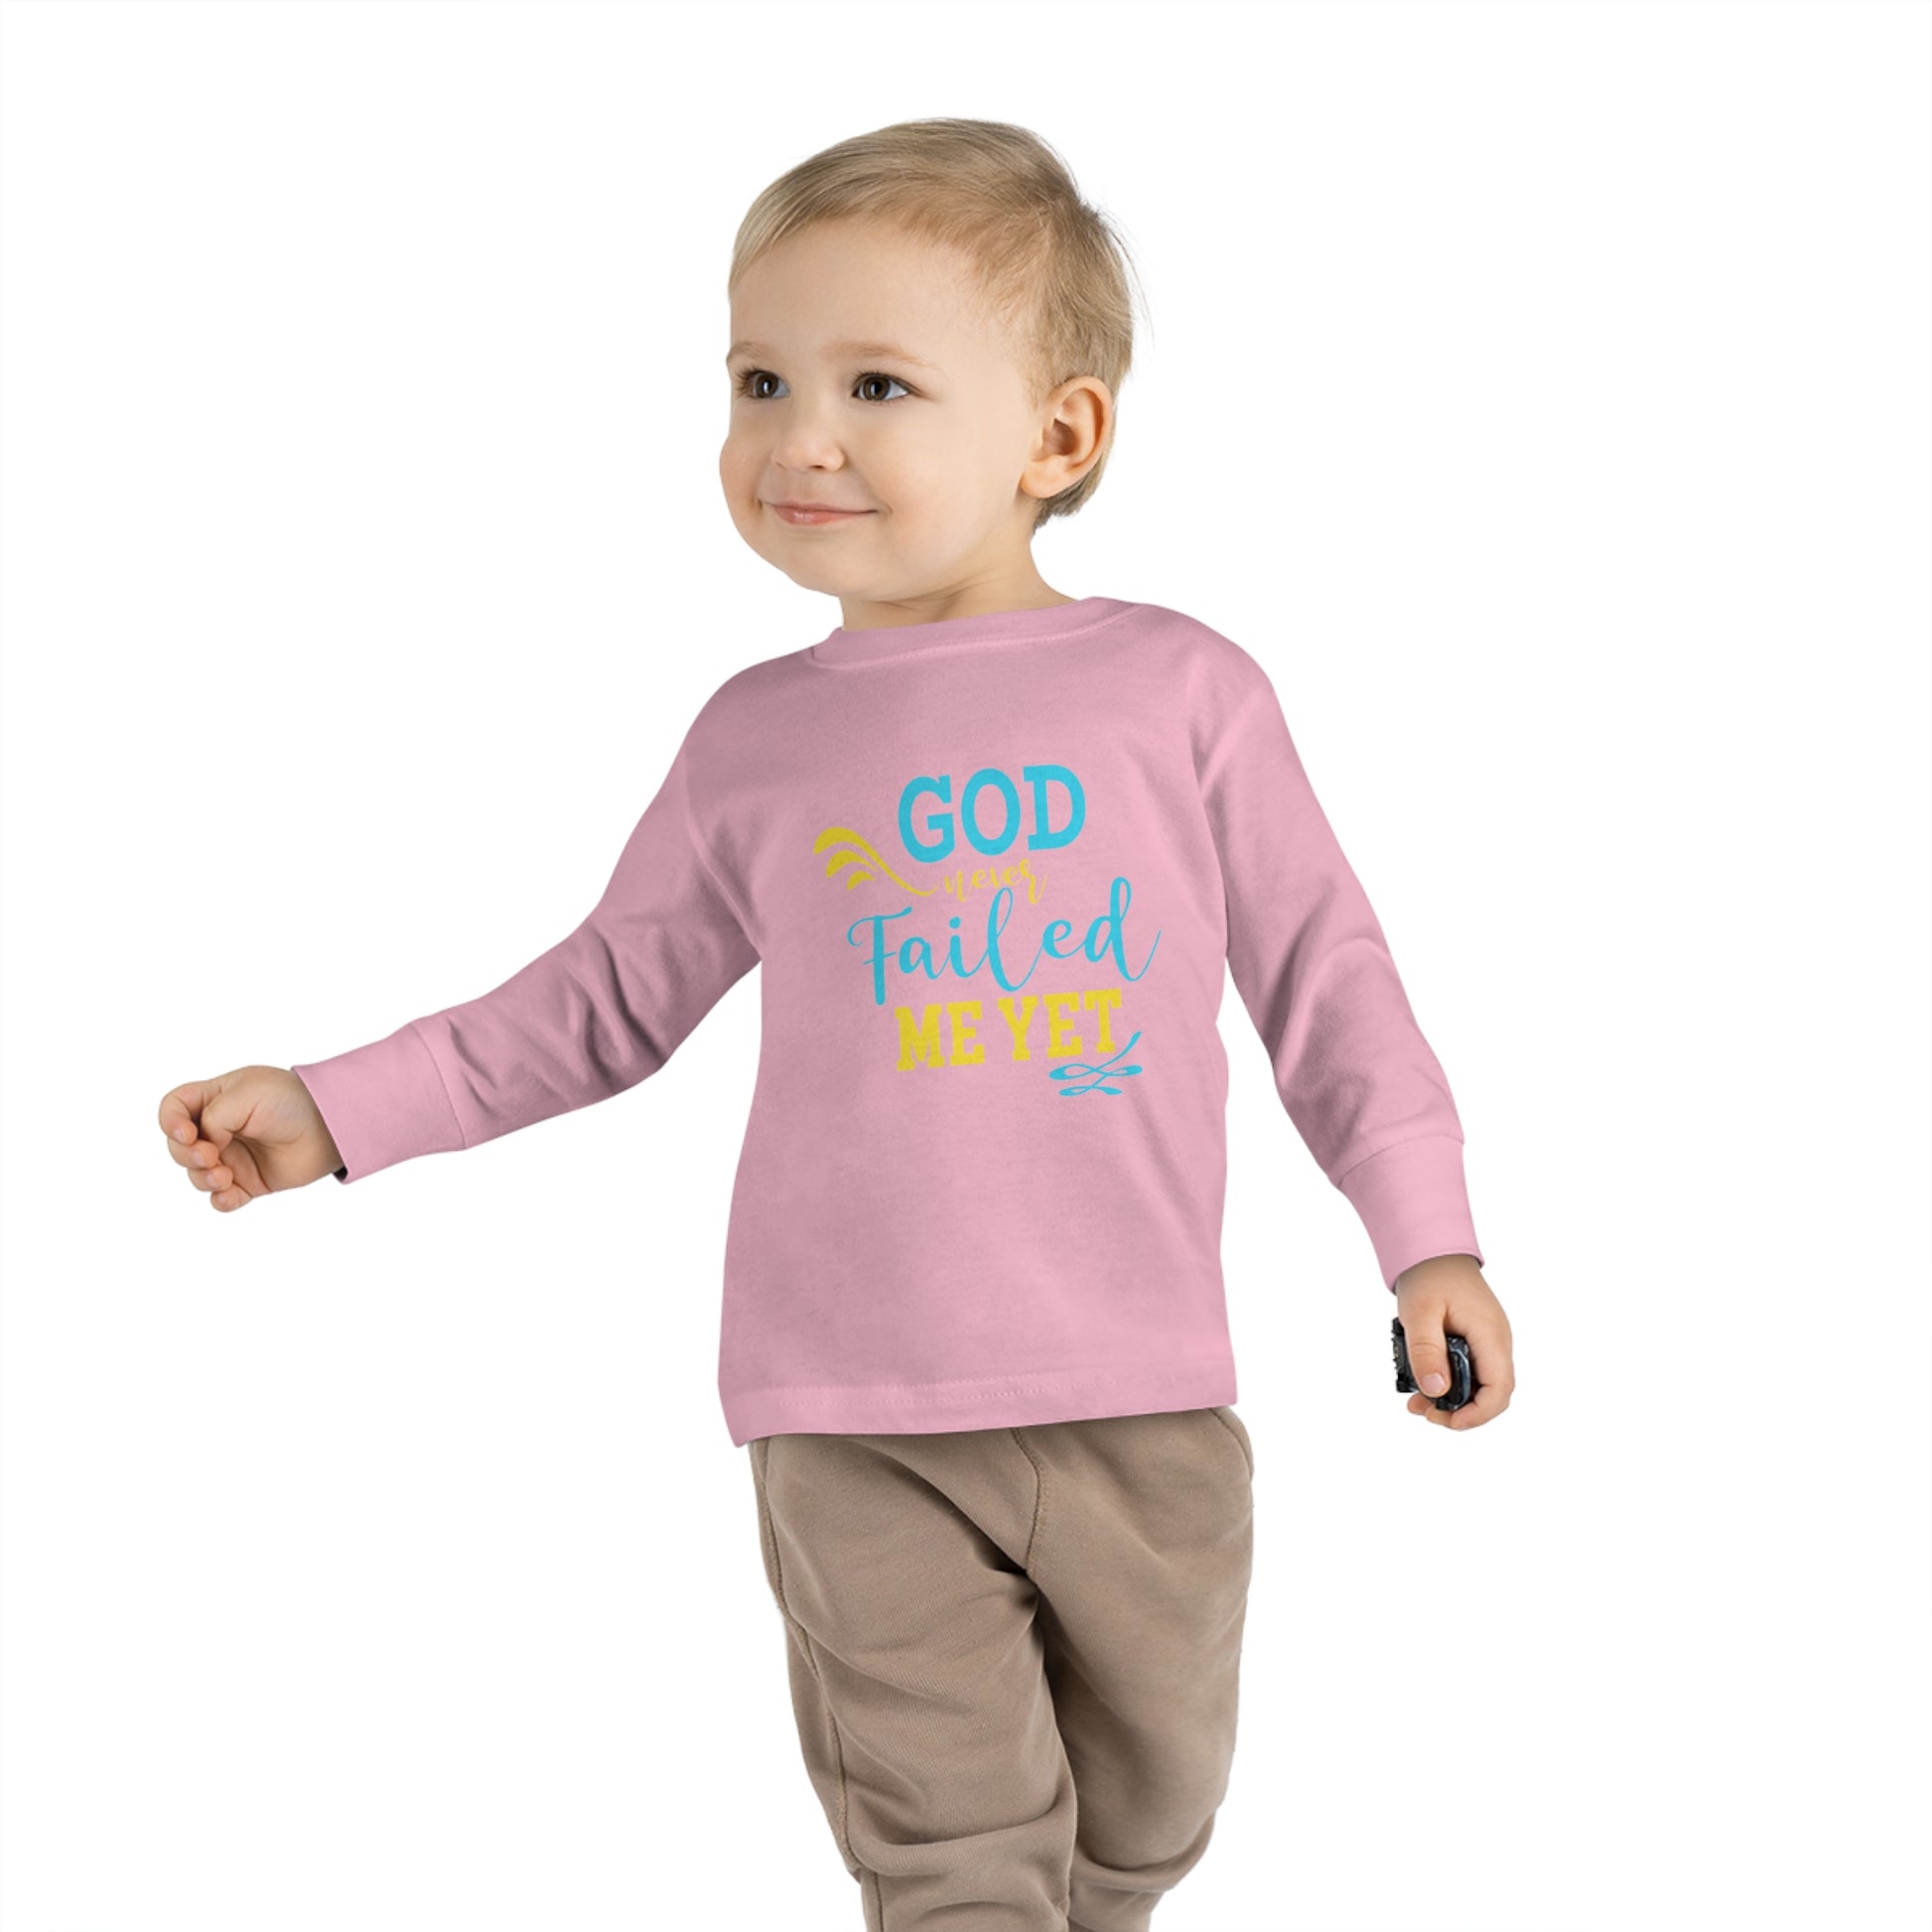 God Never Failed Me Yet Toddler Christian Sweatshirt Printify